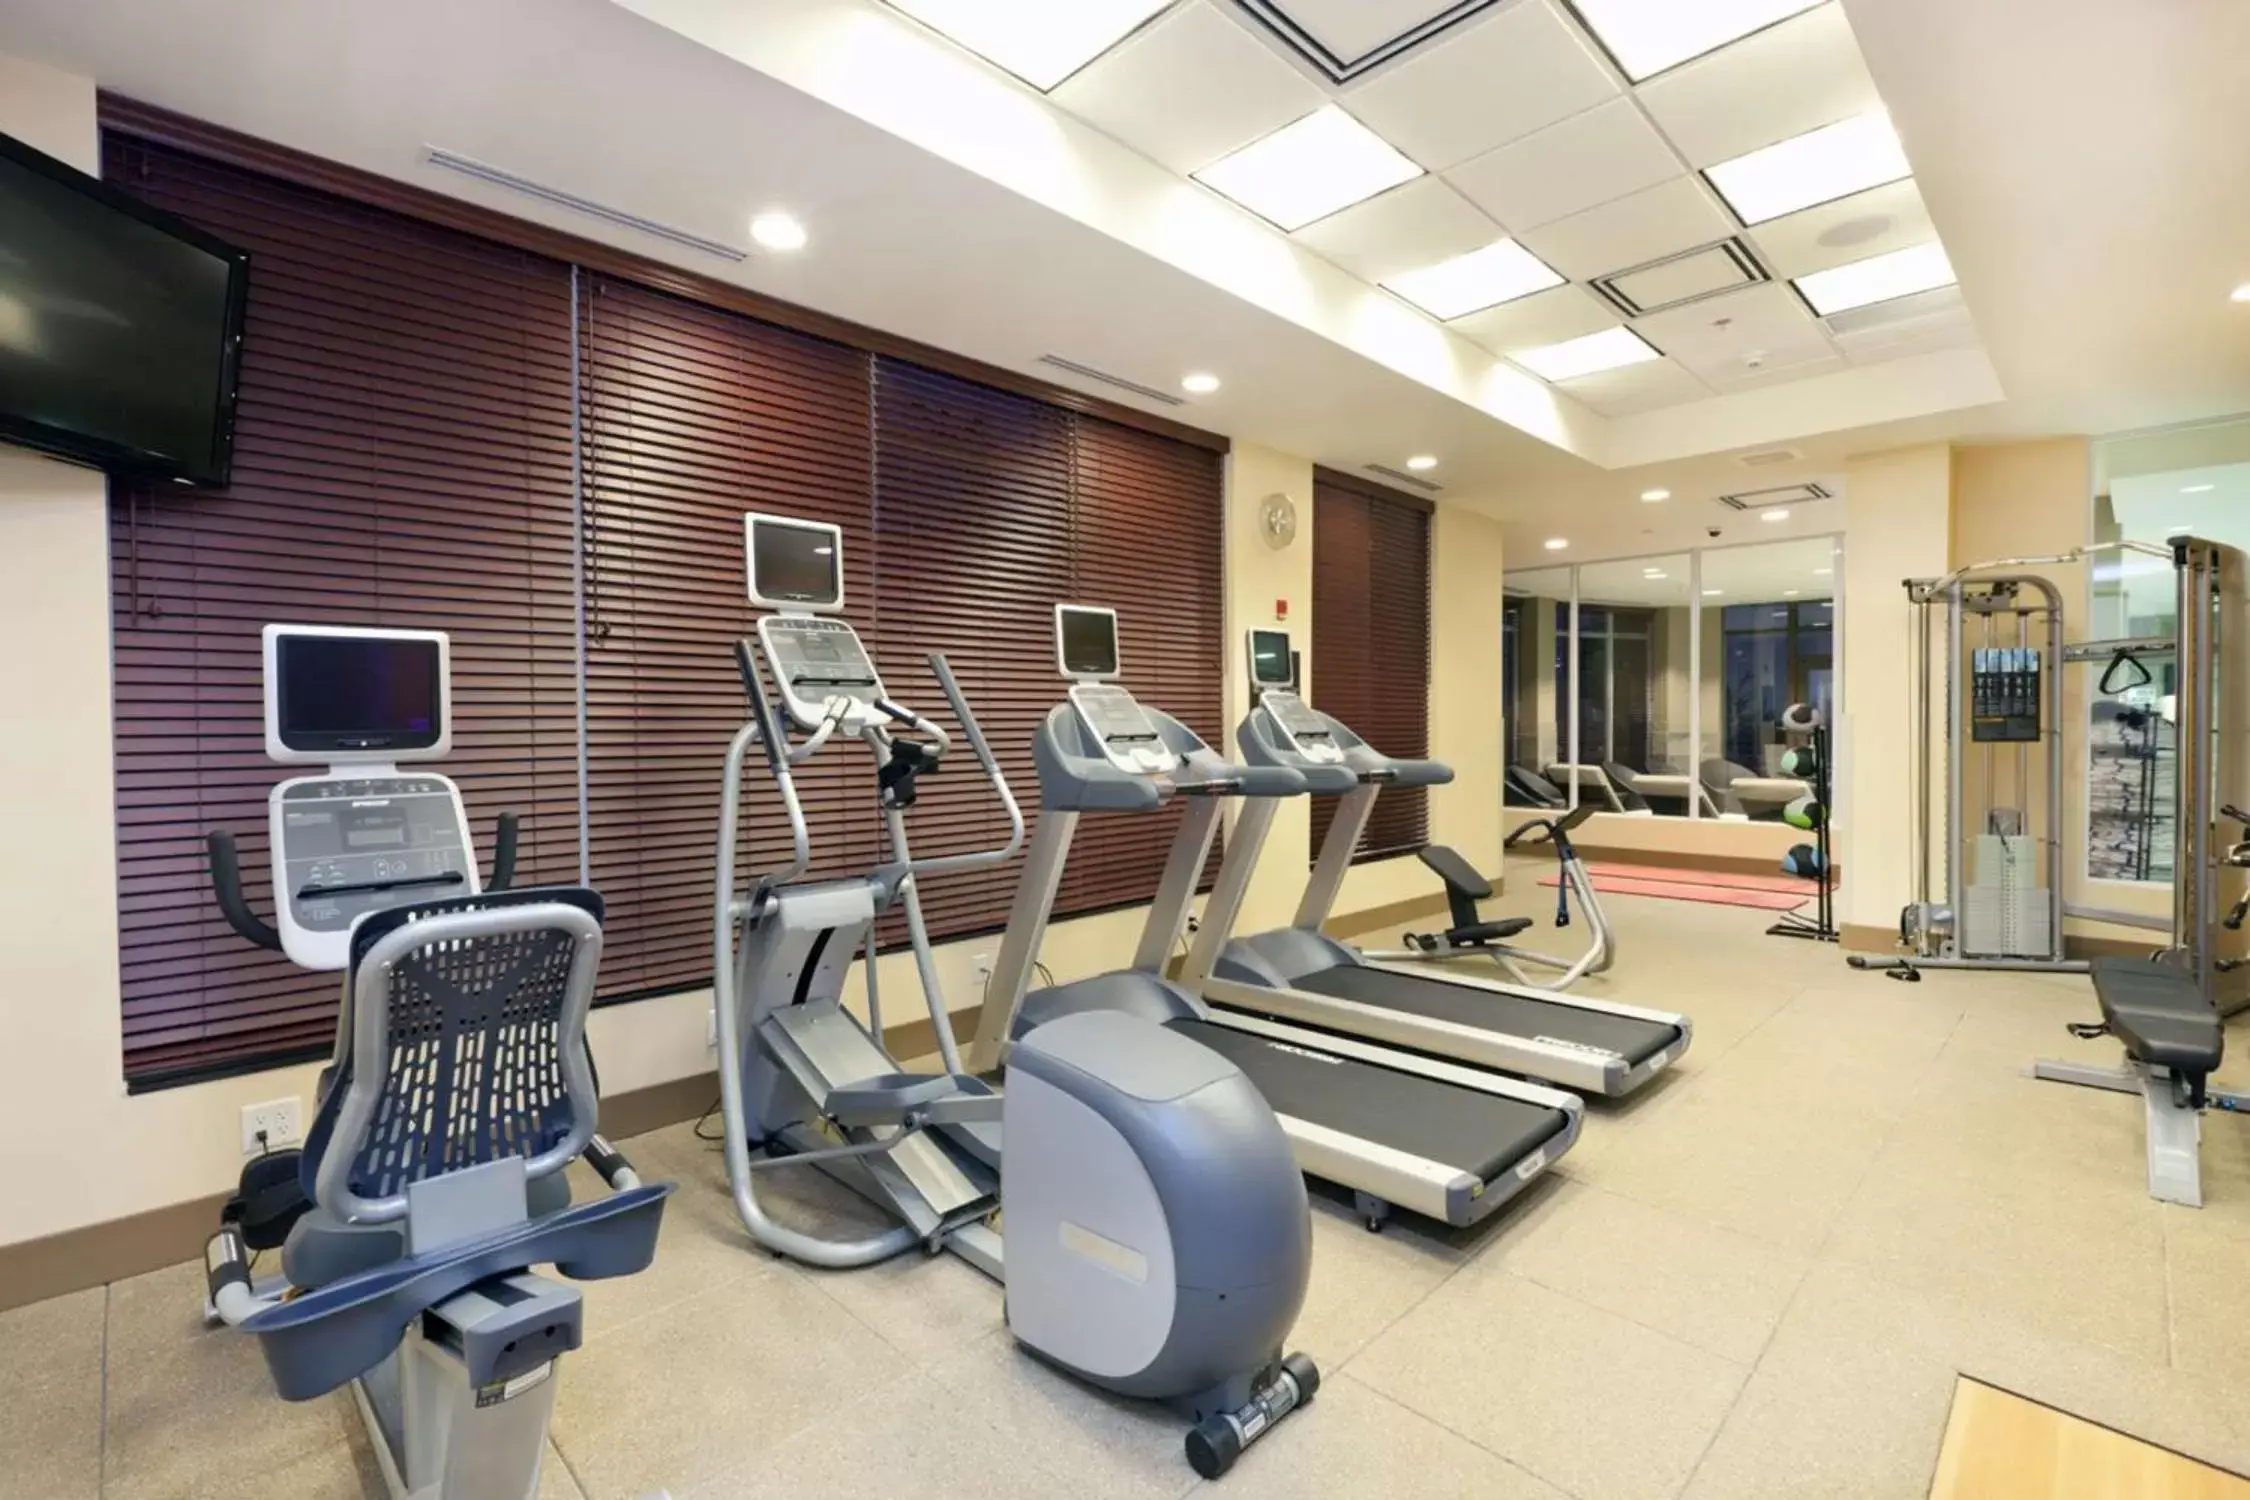 Fitness centre/facilities, Fitness Center/Facilities in Hilton Garden Inn Toronto/Brampton